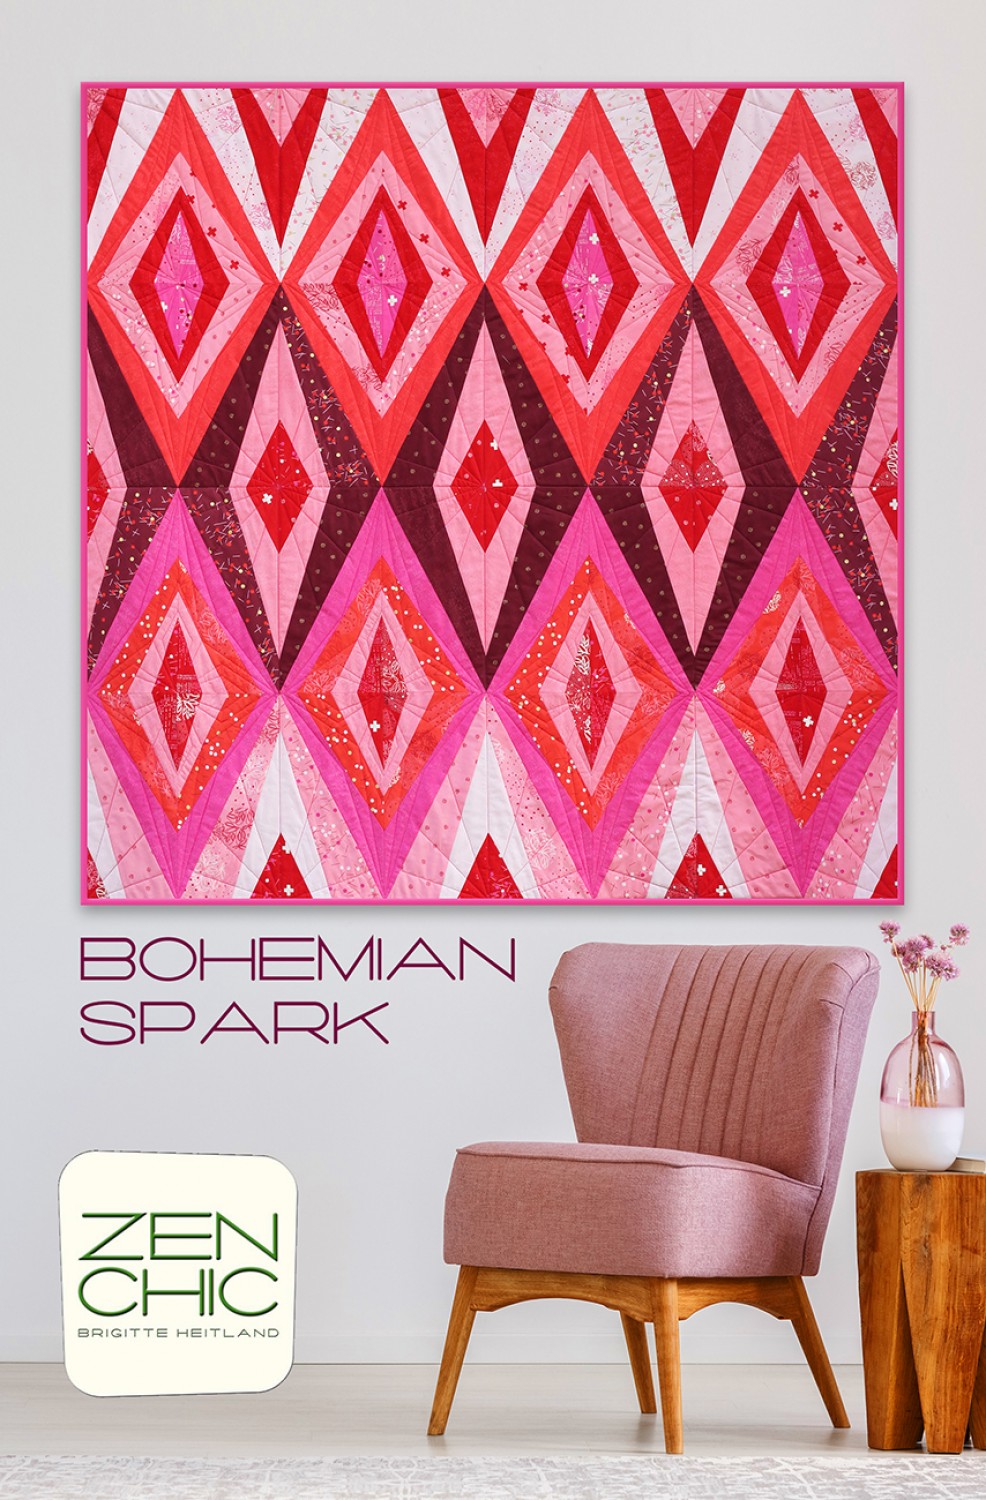 patroon Bohemian Spark